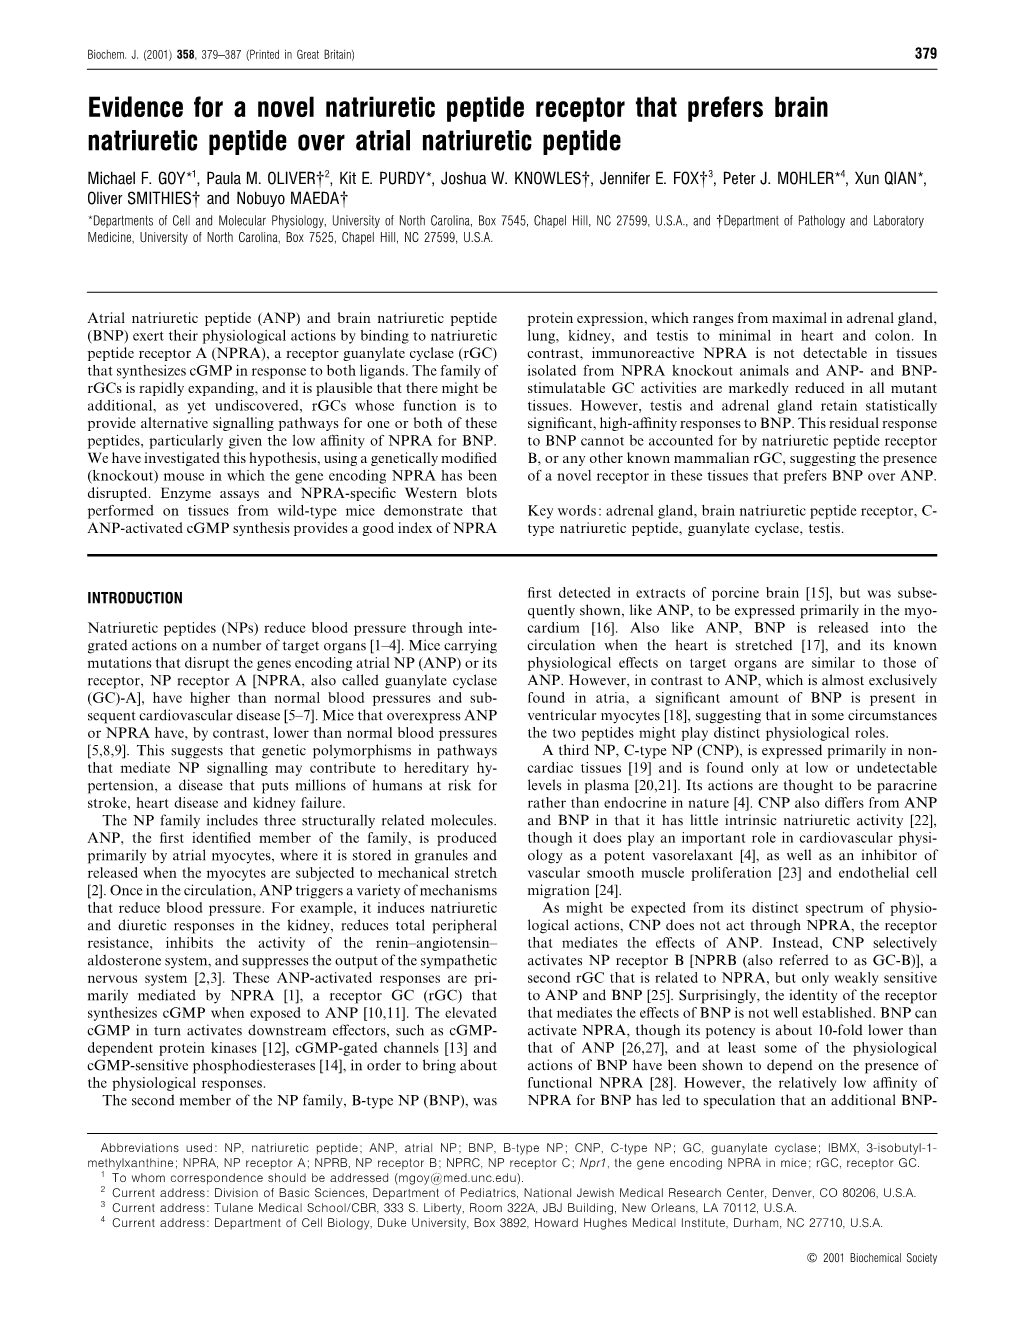 Evidence for a Novel Natriuretic Peptide Receptor That Prefers Brain Natriuretic Peptide Over Atrial Natriuretic Peptide Michael F